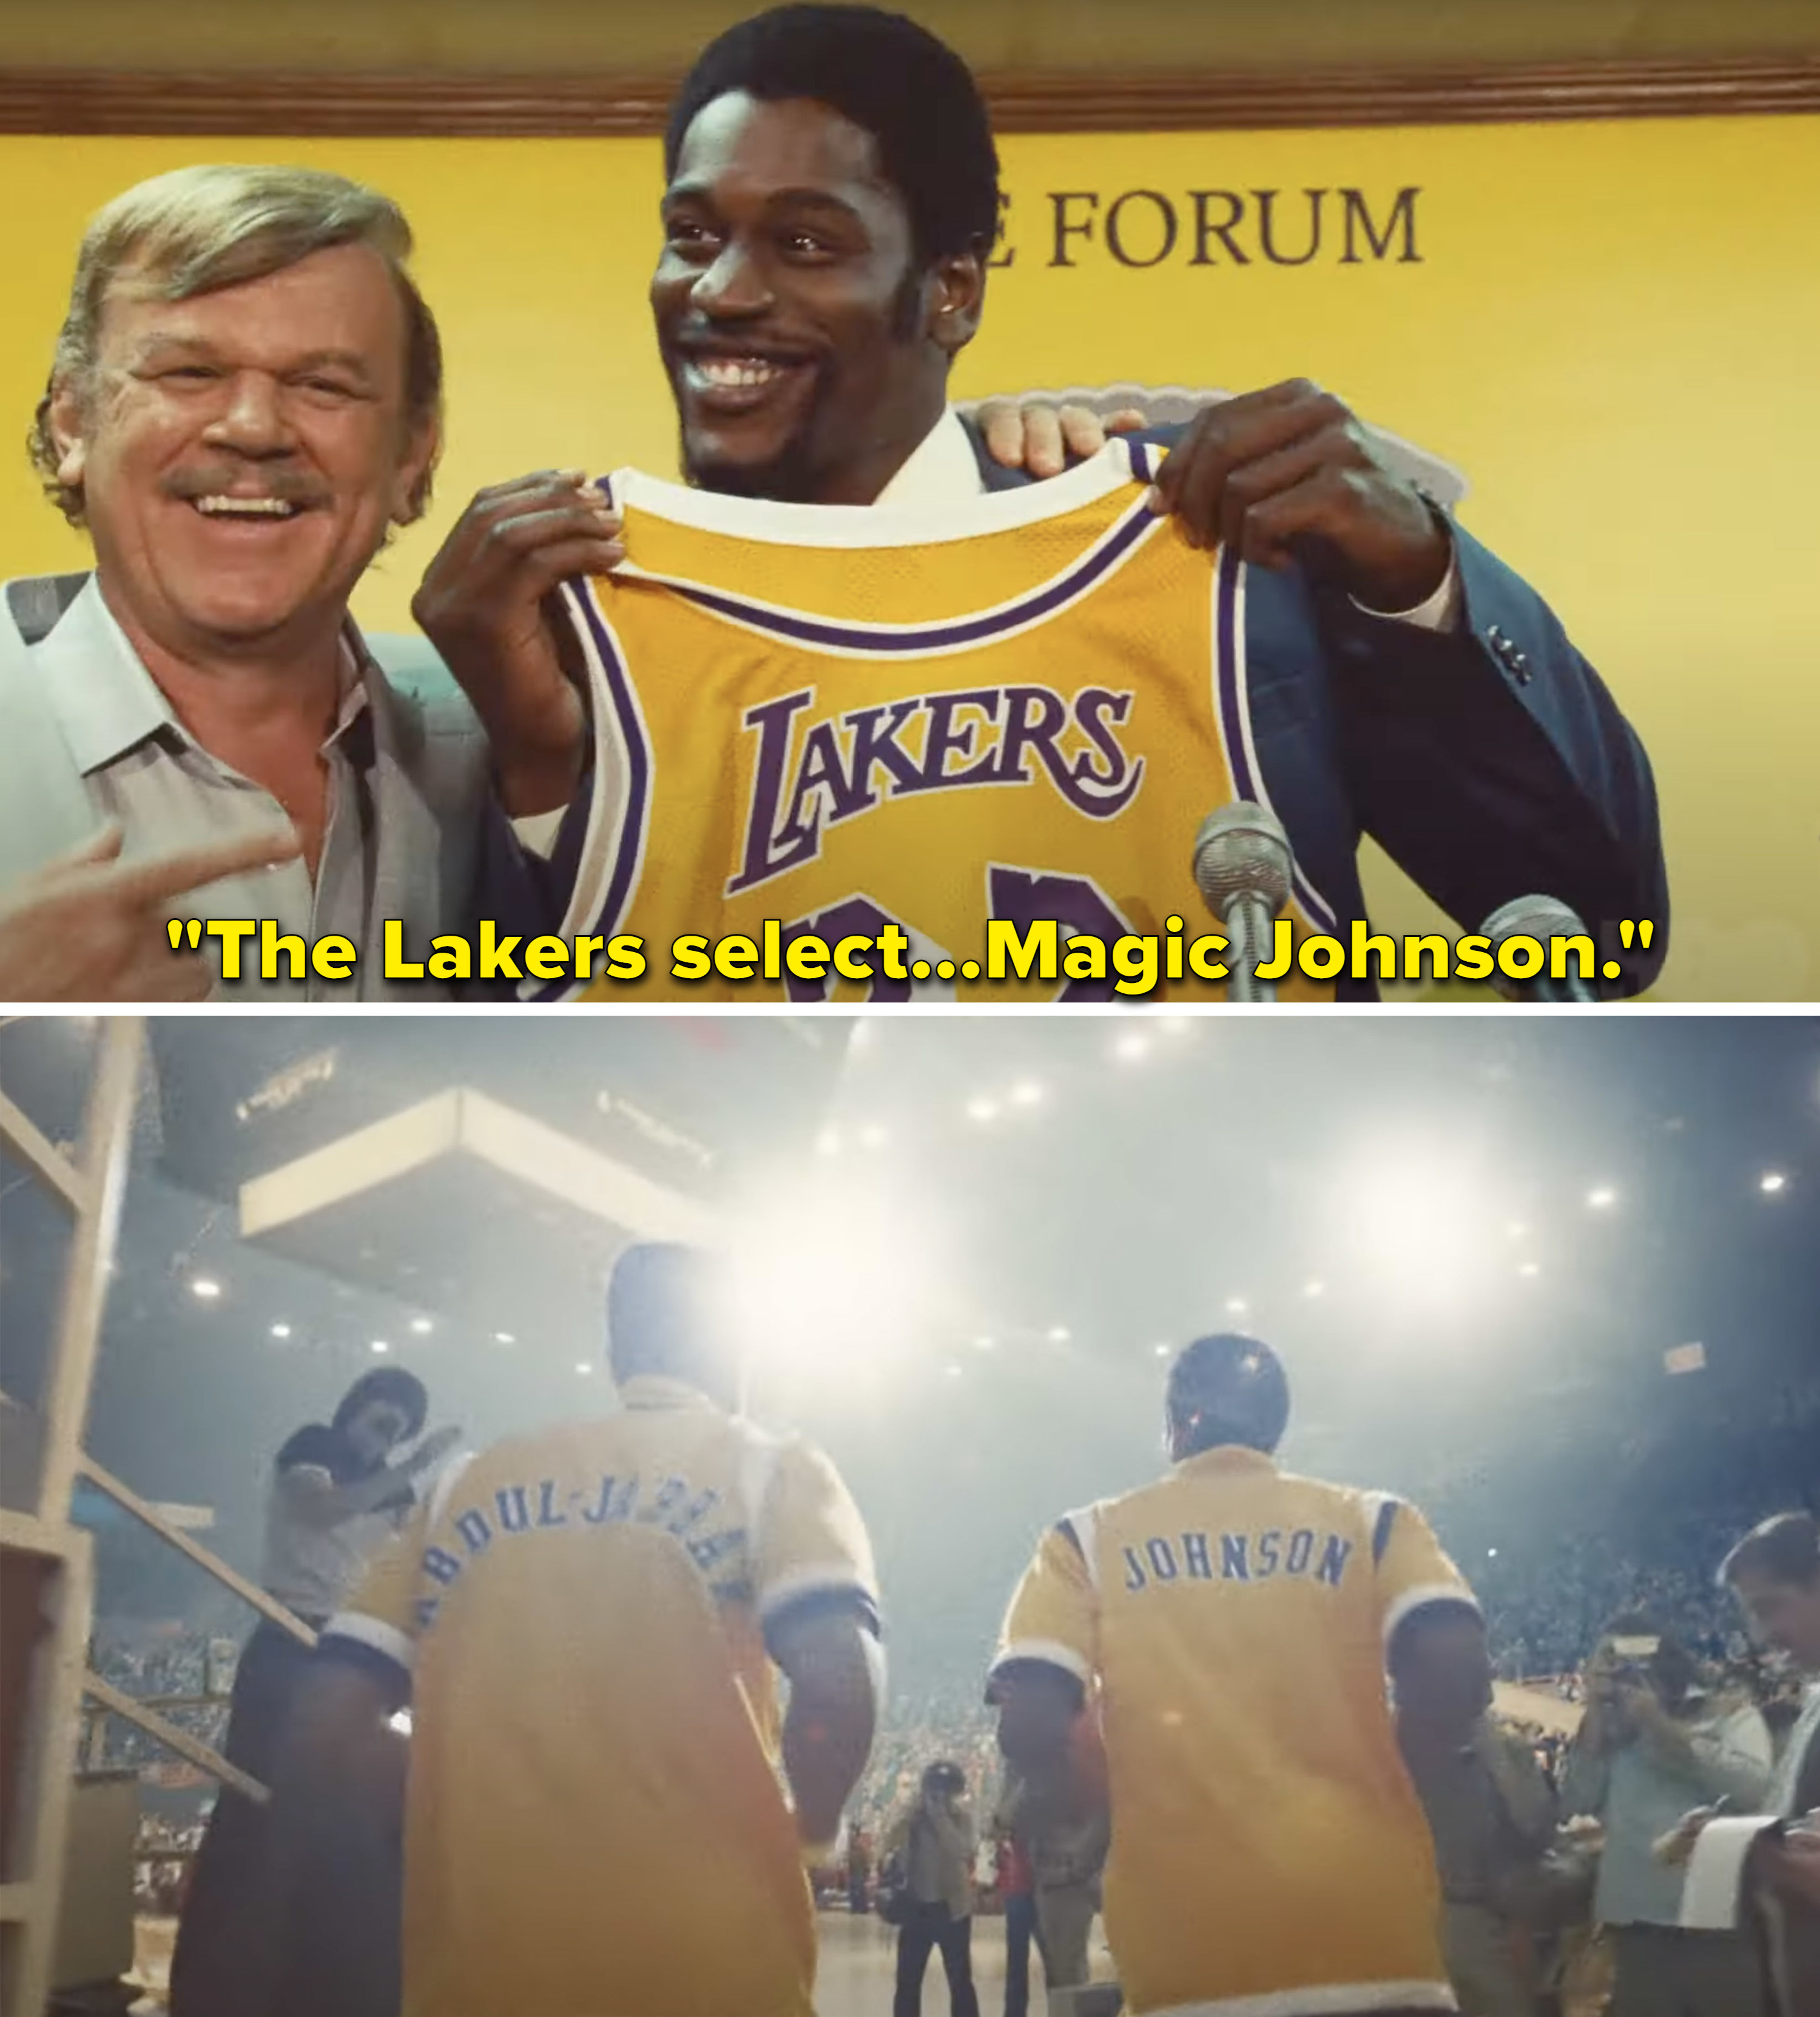 The Lakers choosing Magic Johnson in the NBA draft